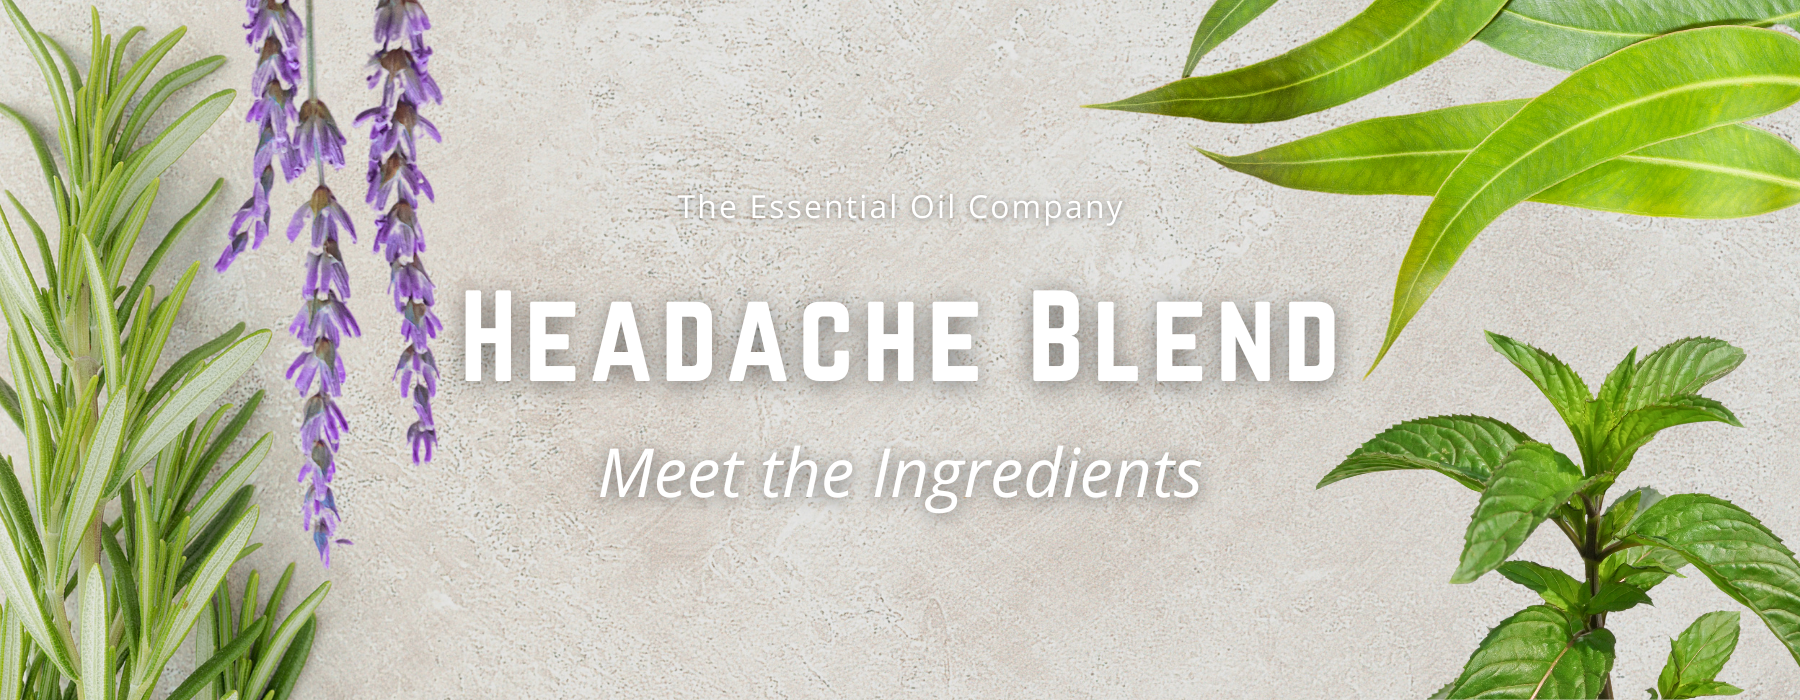 Headache Blend: Meet the Ingredients